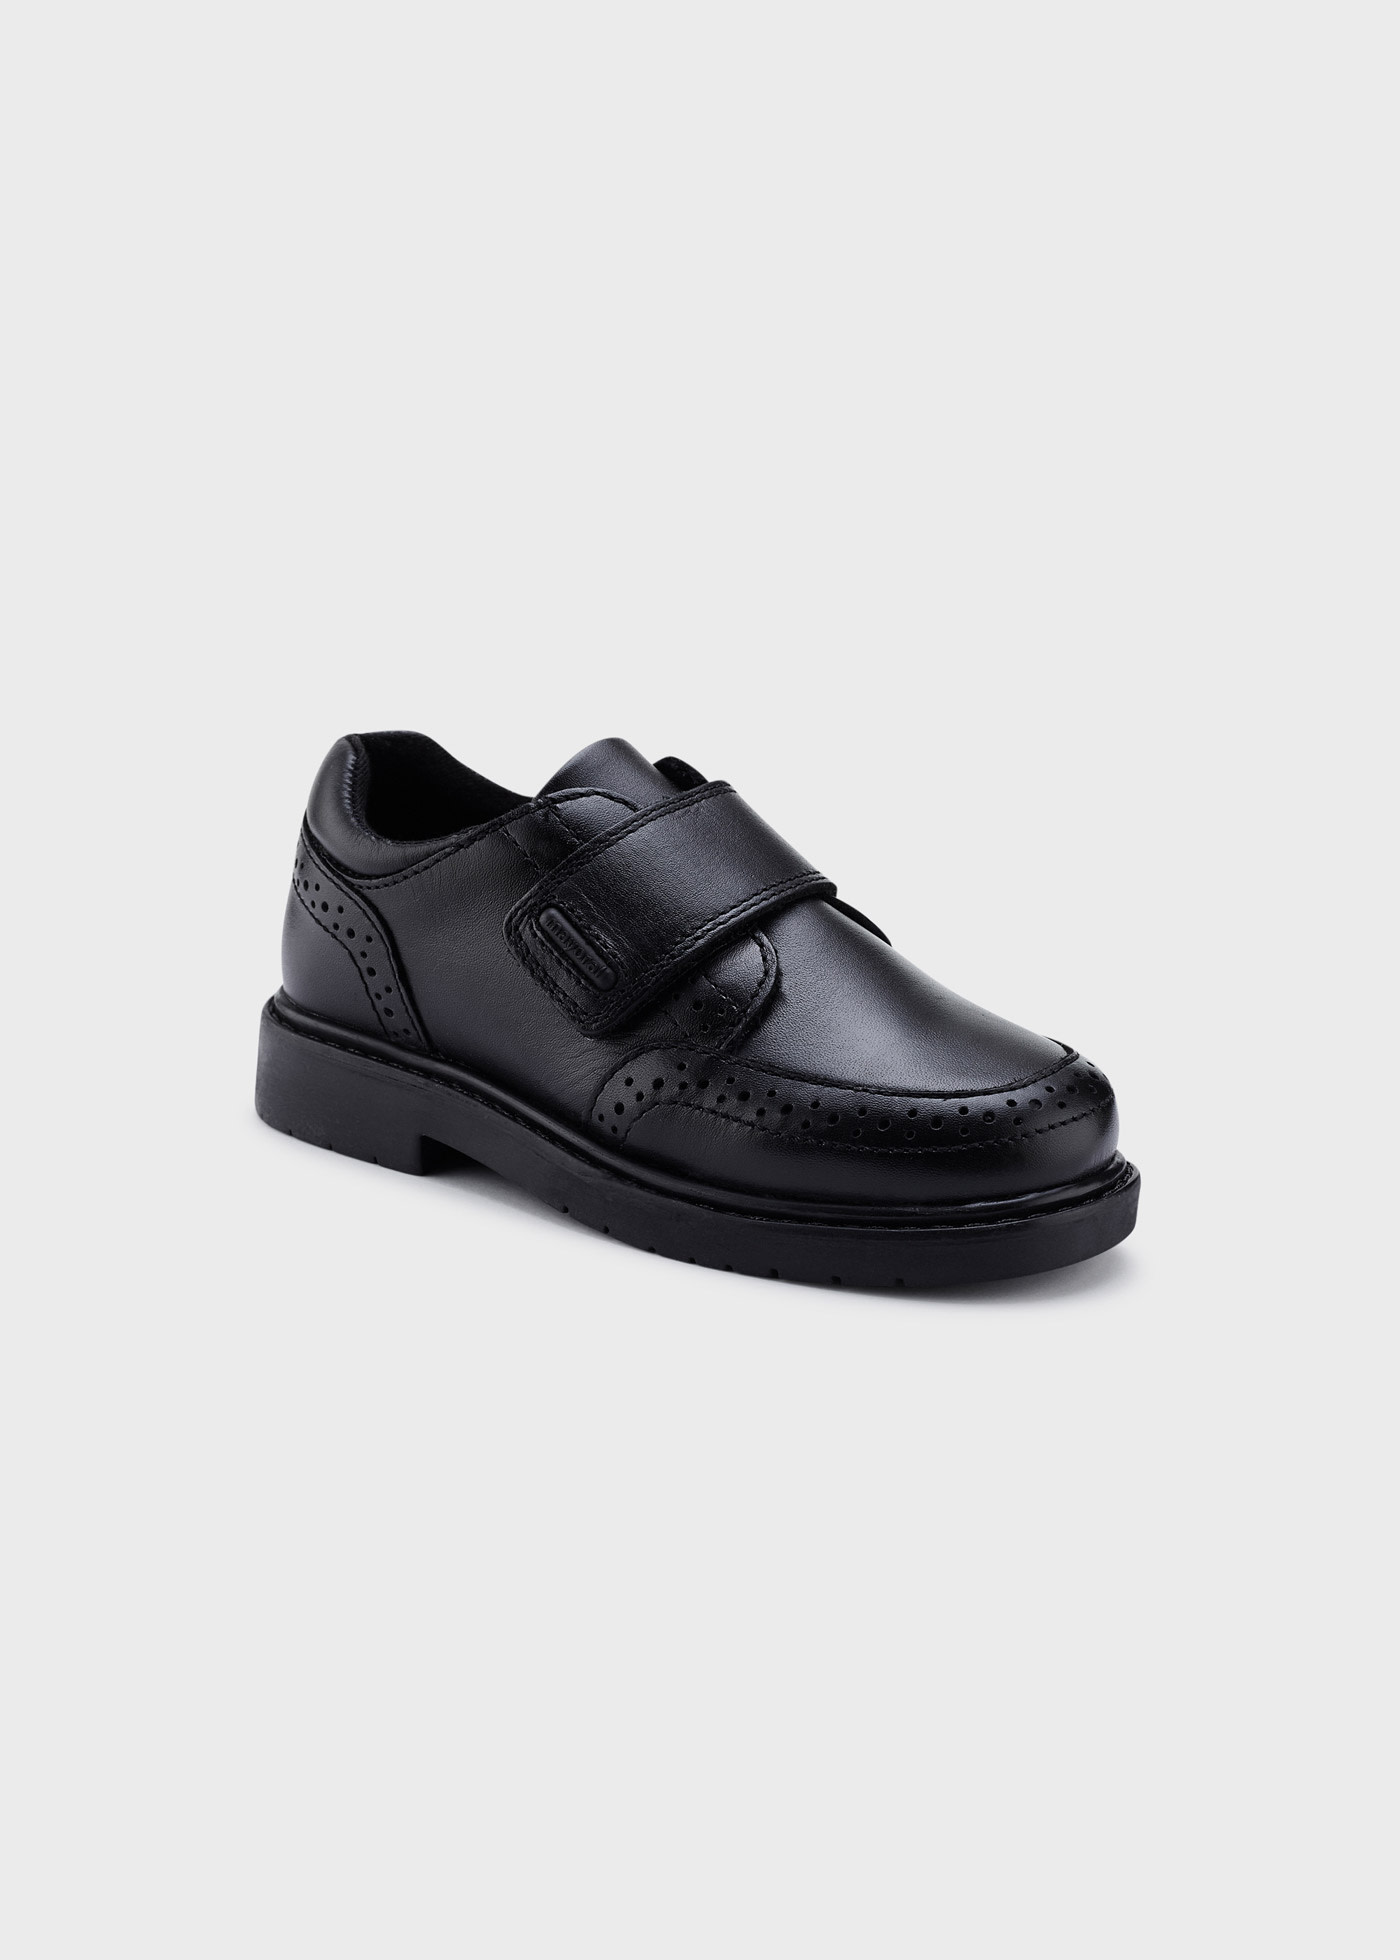 Leather school shoes boy